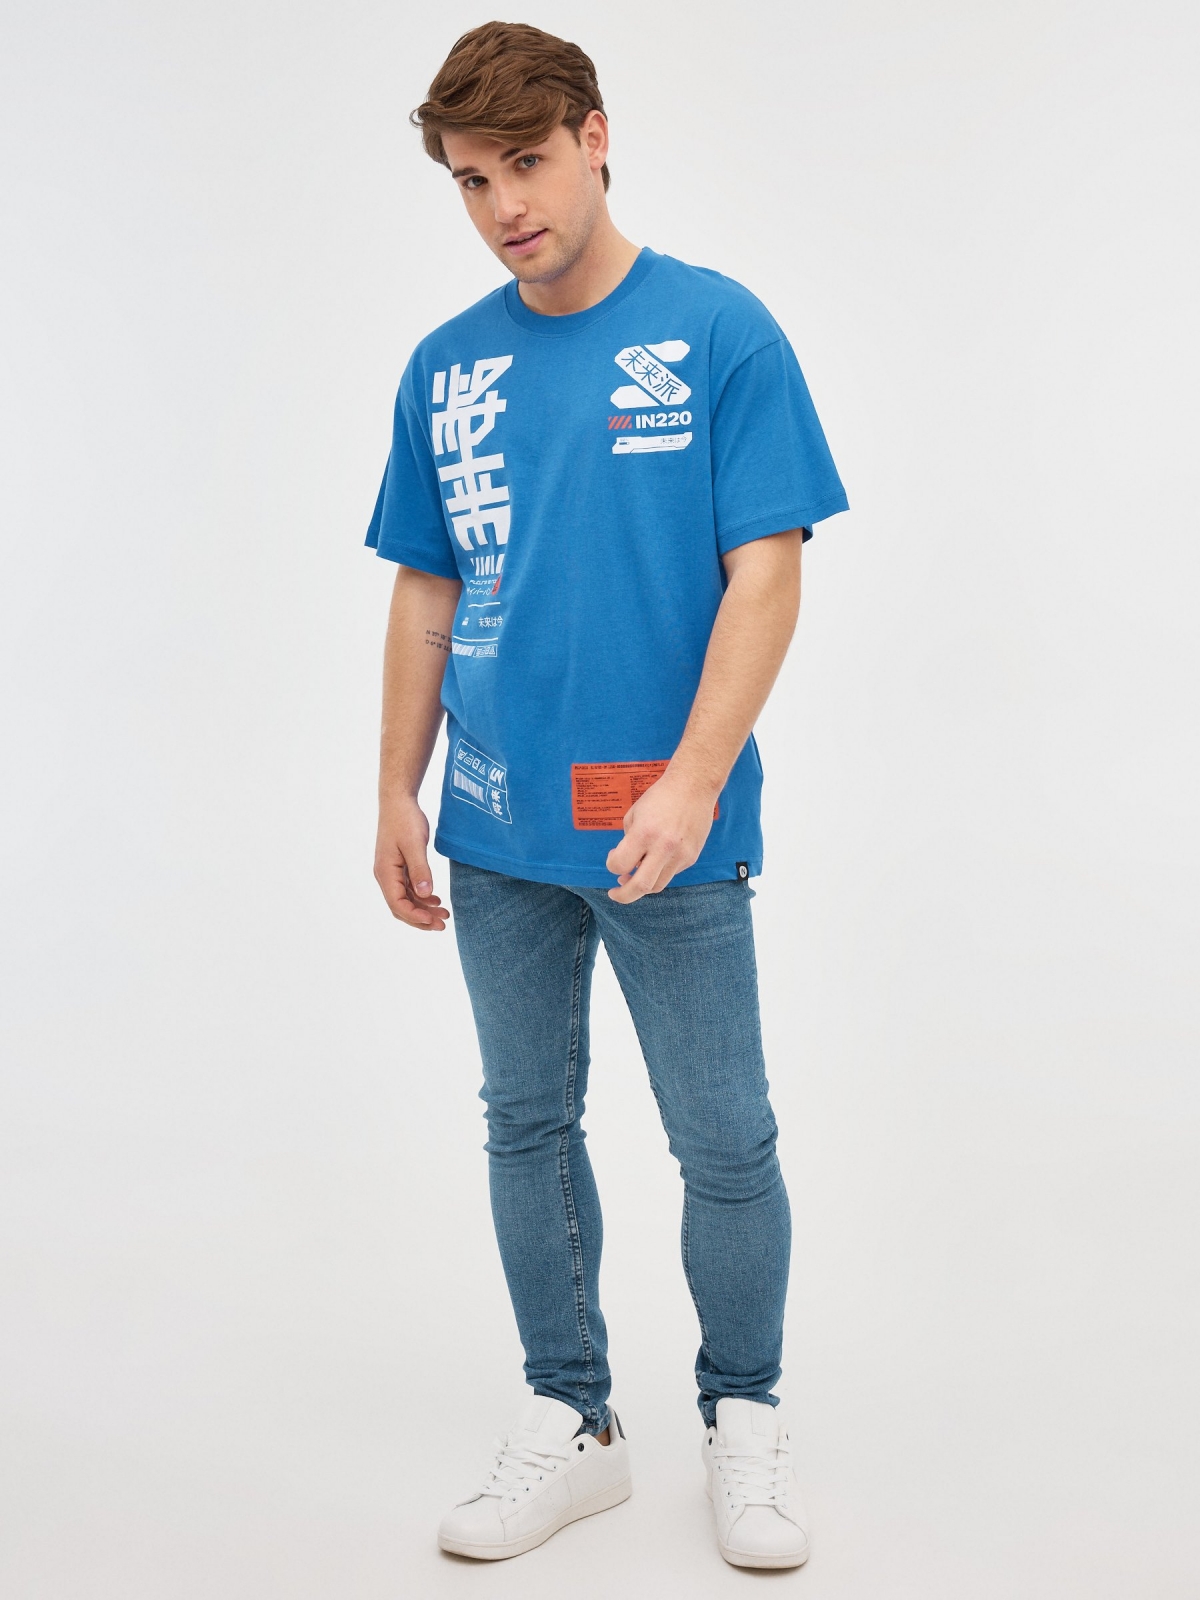 Orange Japanese print T-shirt electric blue front view